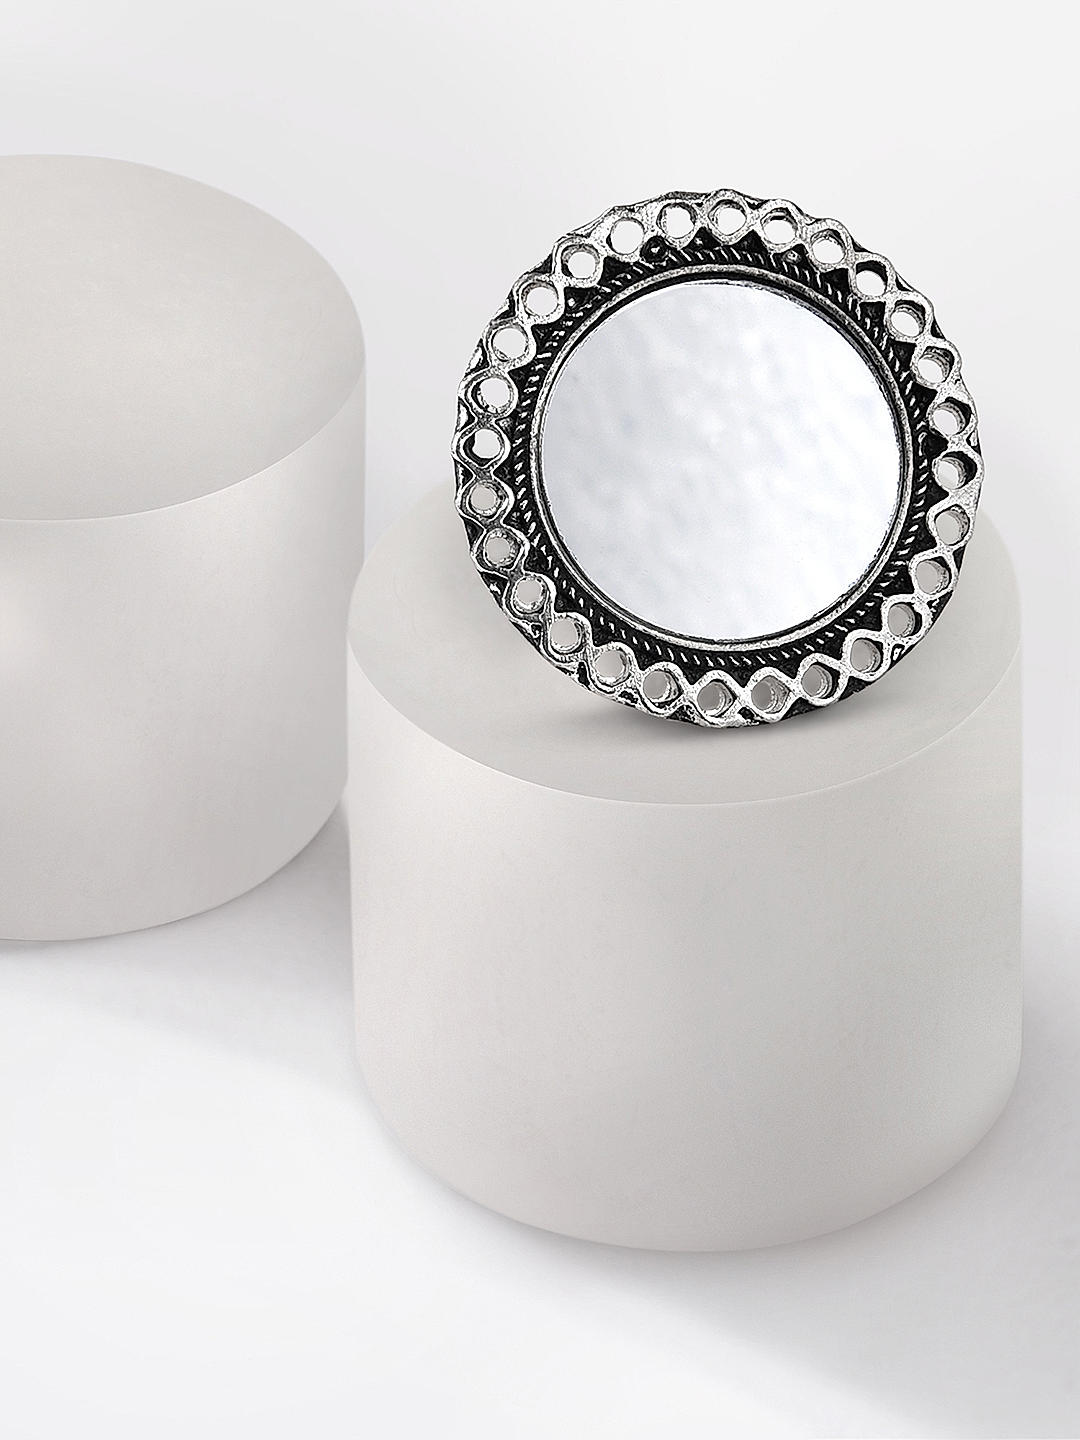 Fida Ethnic Oxidized Silver Mirror Ring for Women